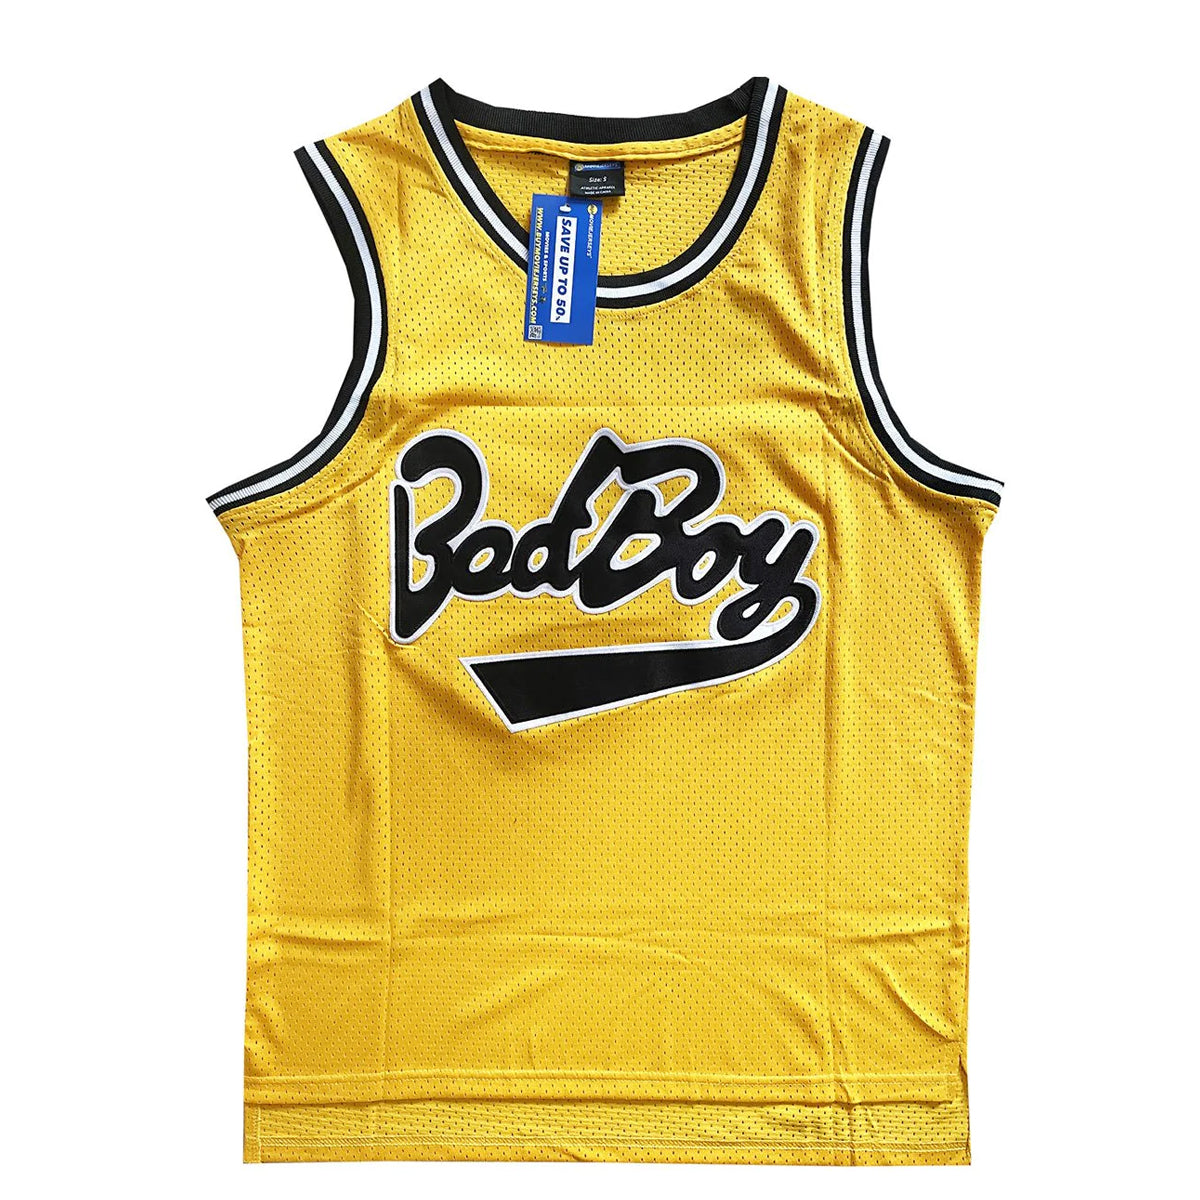 Biggie Smalls #72 Notorious BI.G. Bad Boy Jersey – 99Jersey®: Your